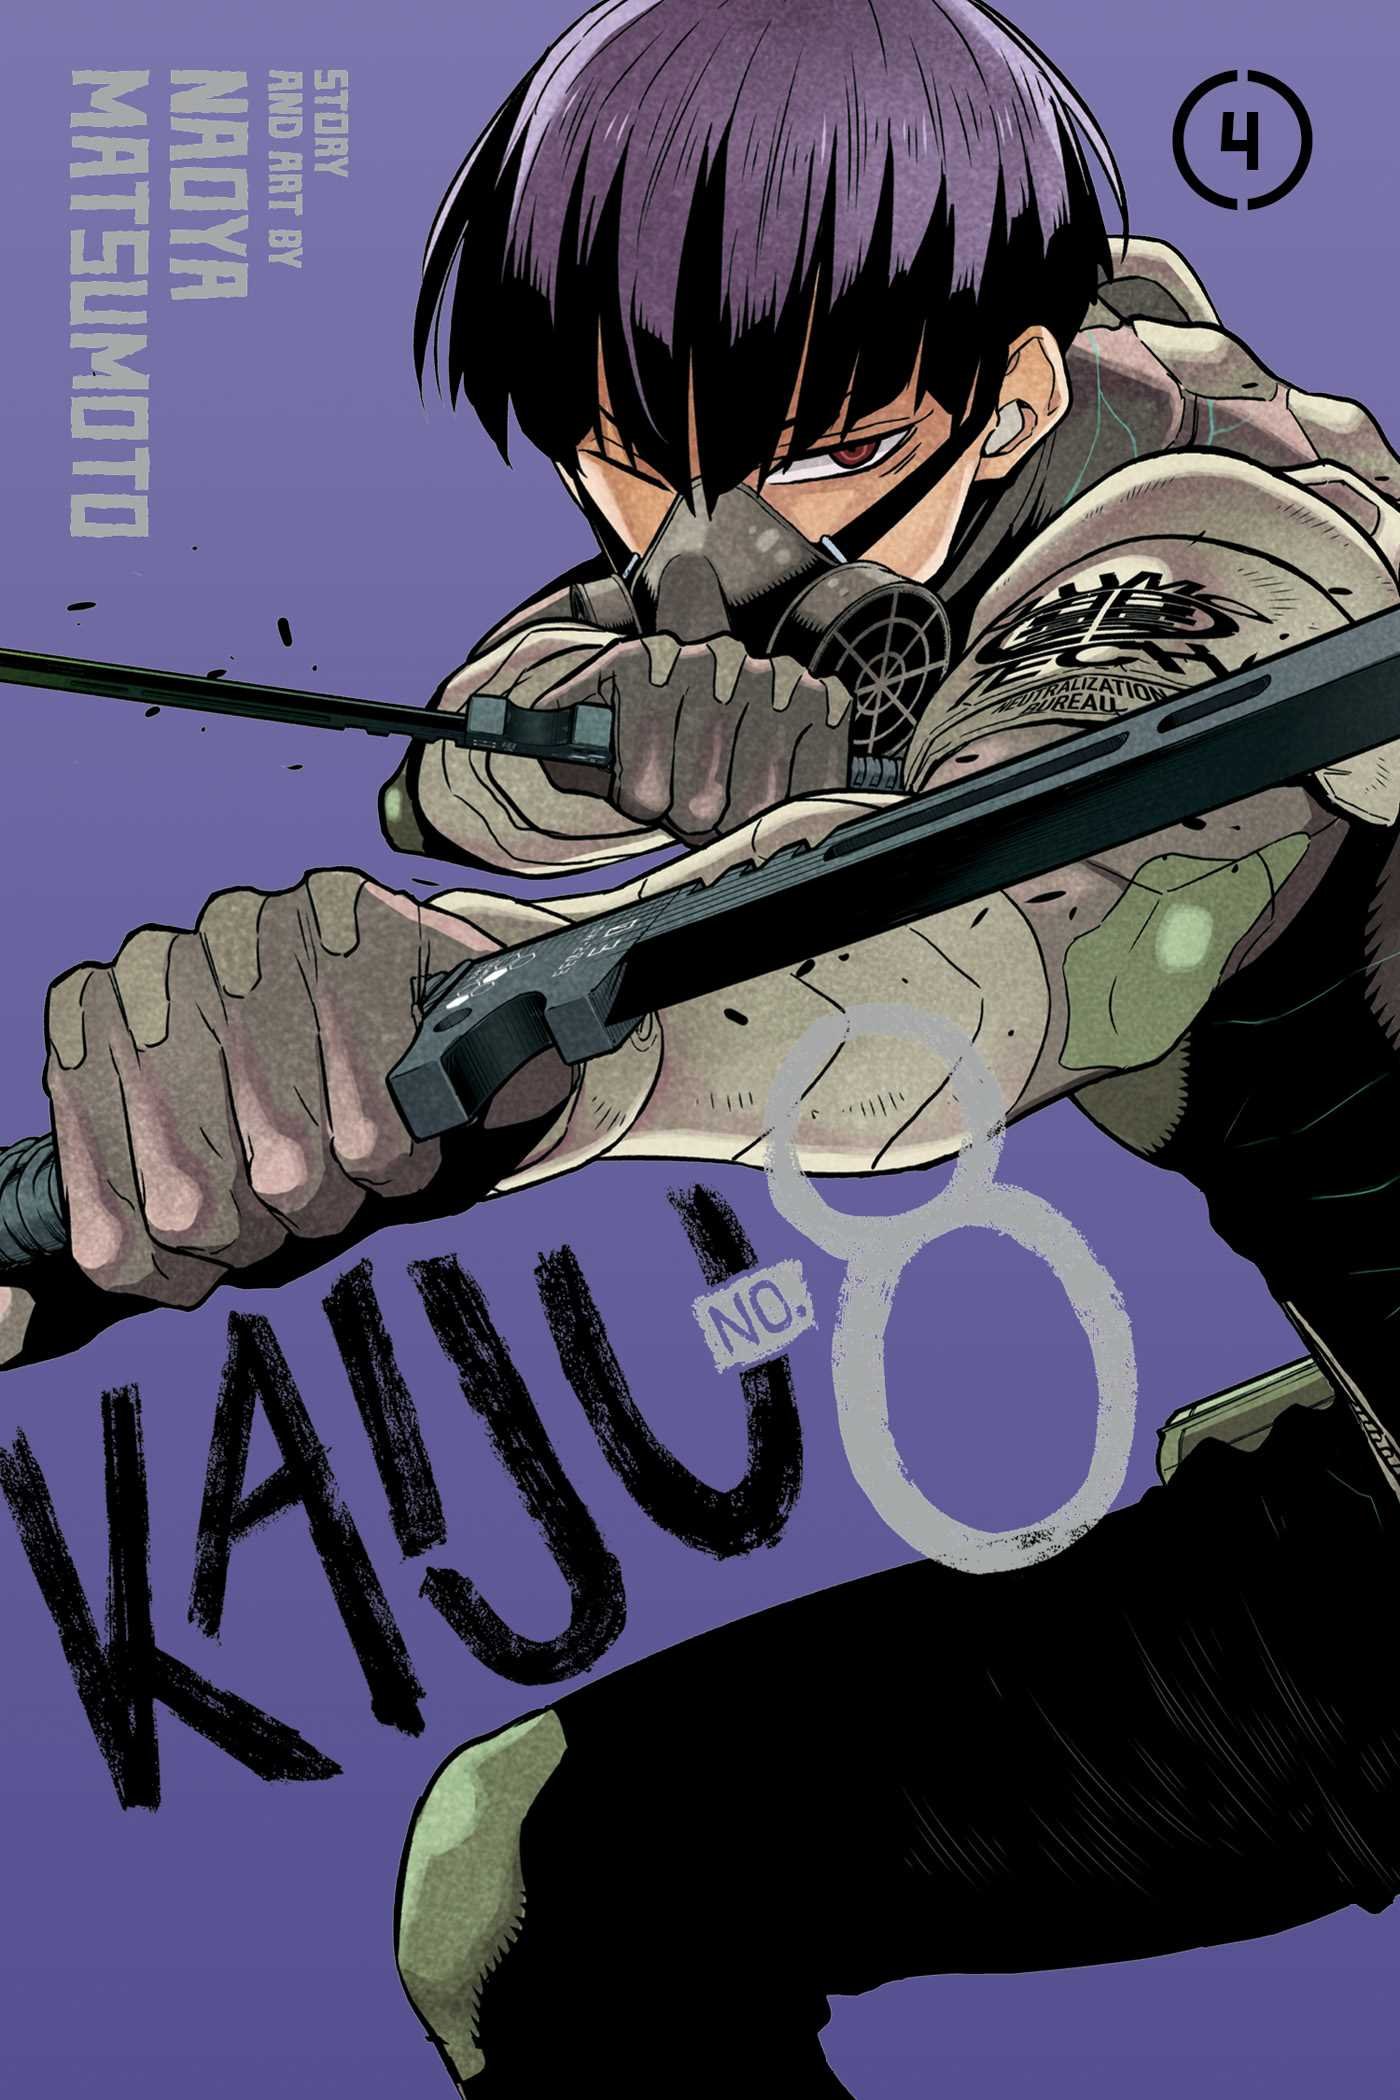 Volume 4 cover of Kaiju No 8